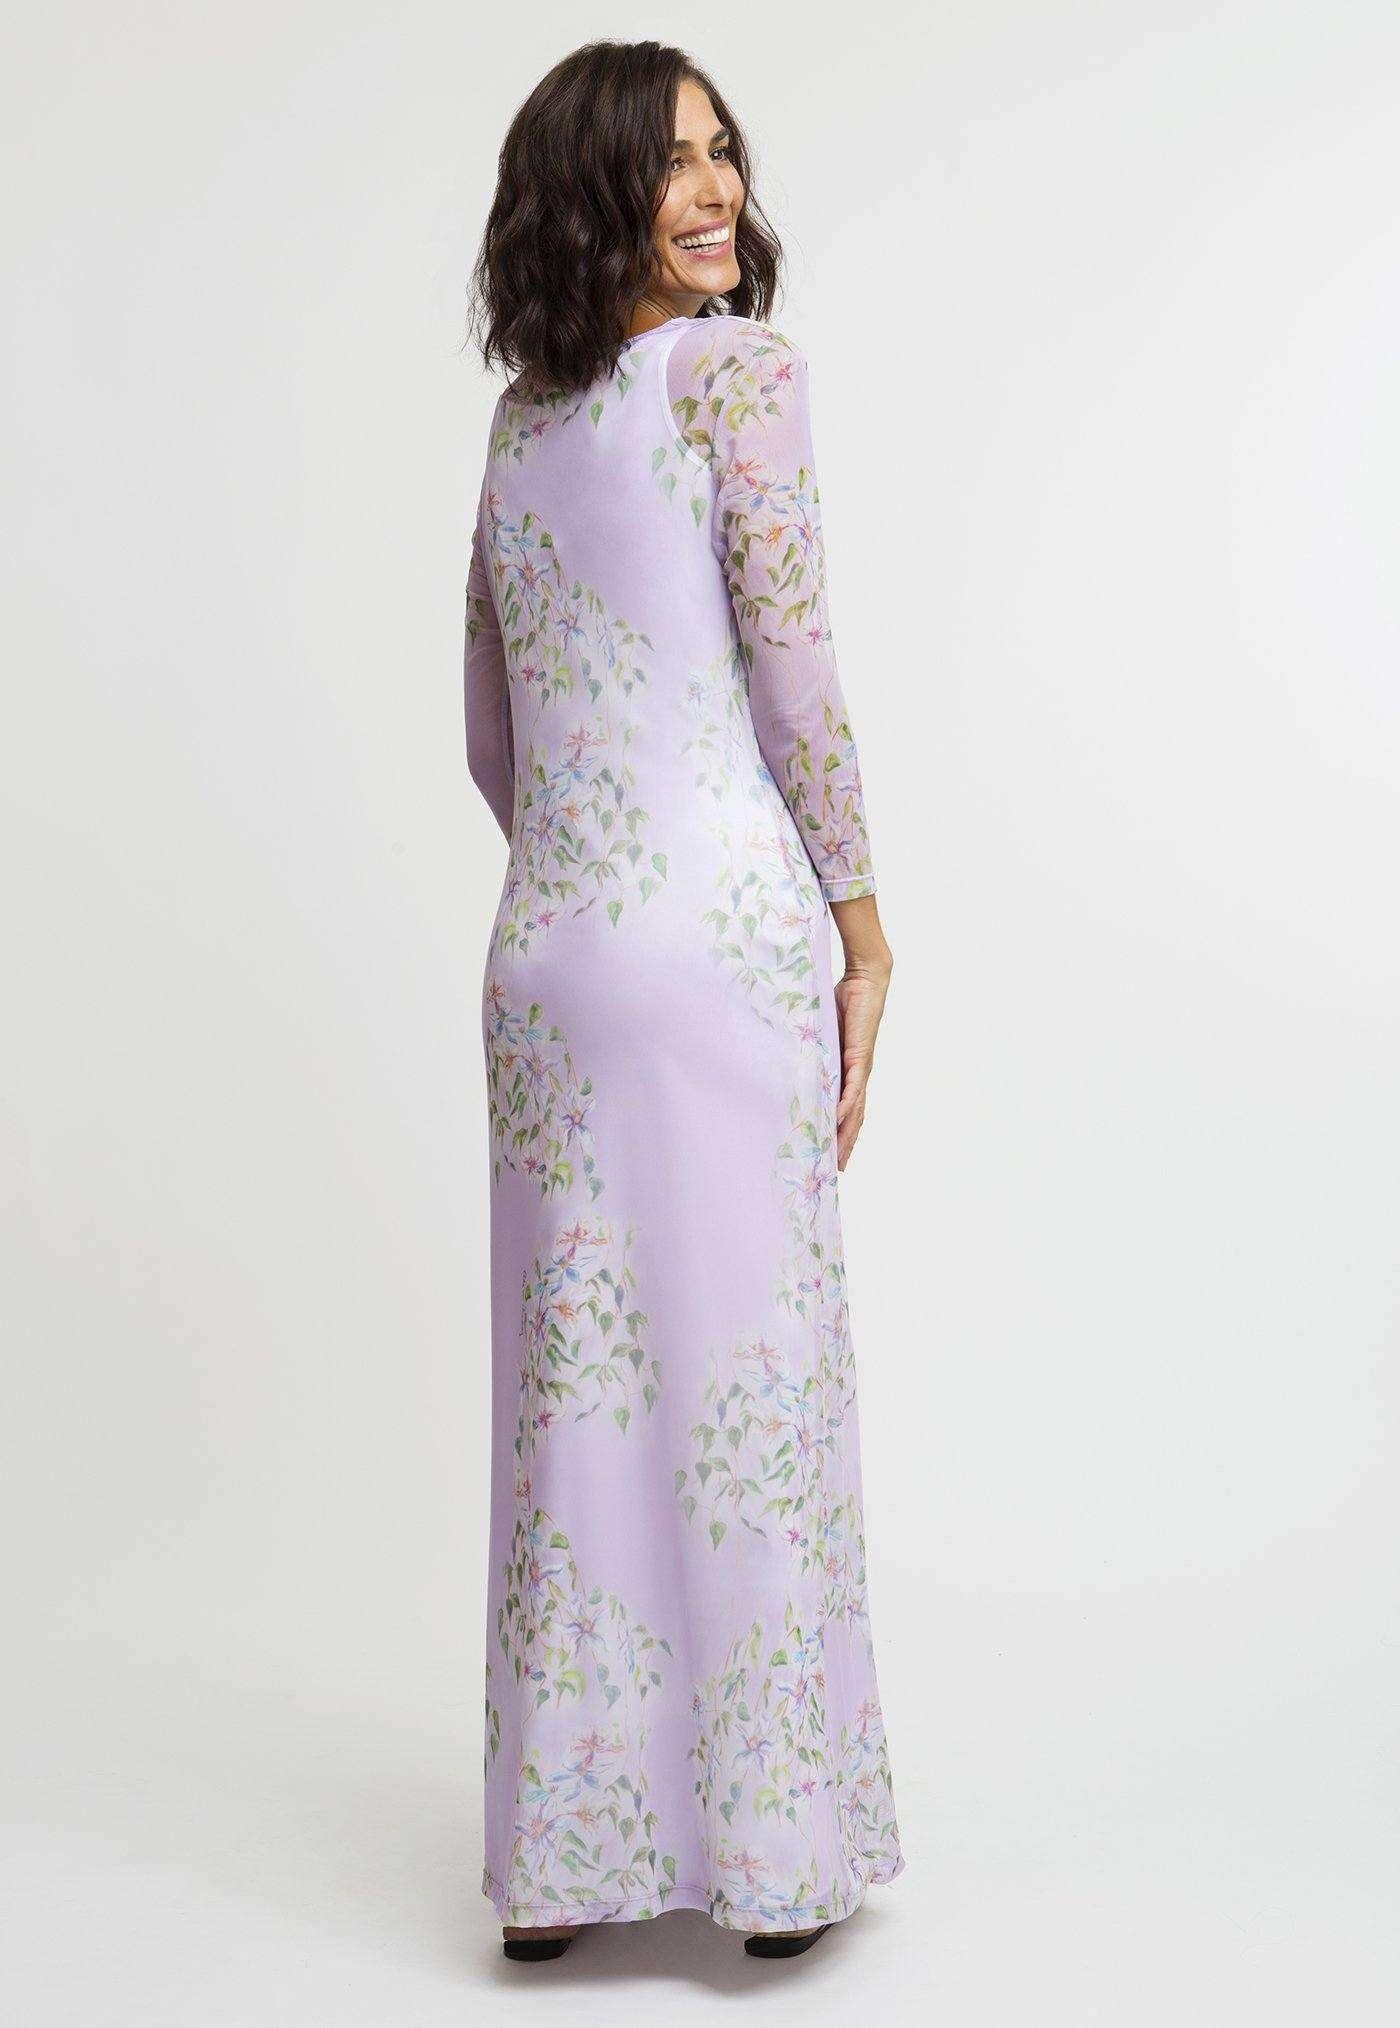 long mesh lavender flower printed cowl neck dress layered over long lavender flower printed stretch knit dress